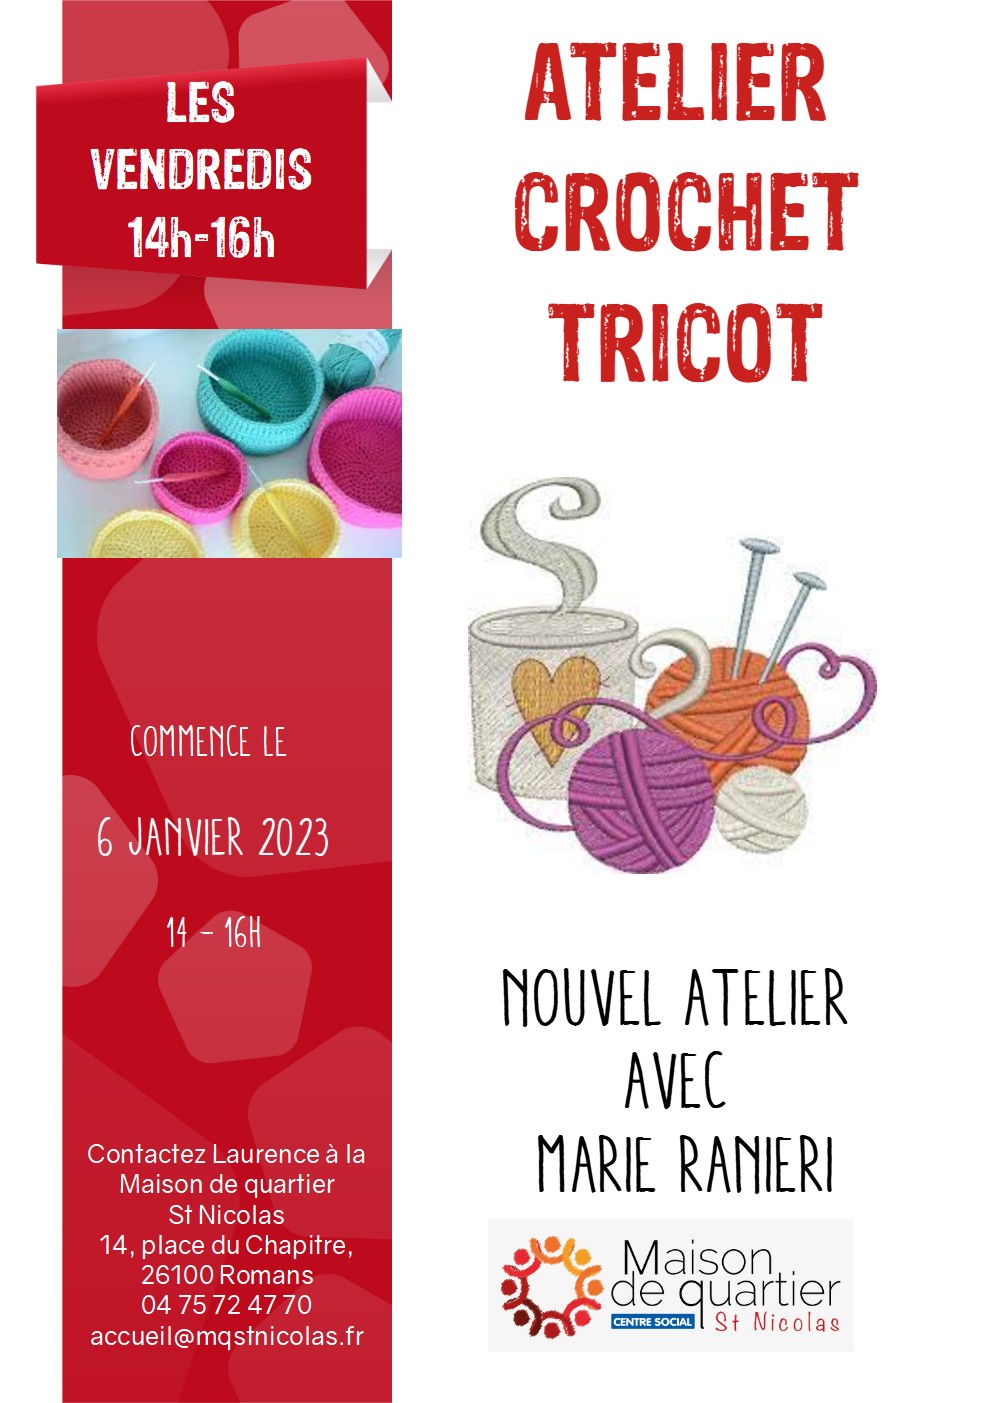 23.01.06 Atelier crochet tricot